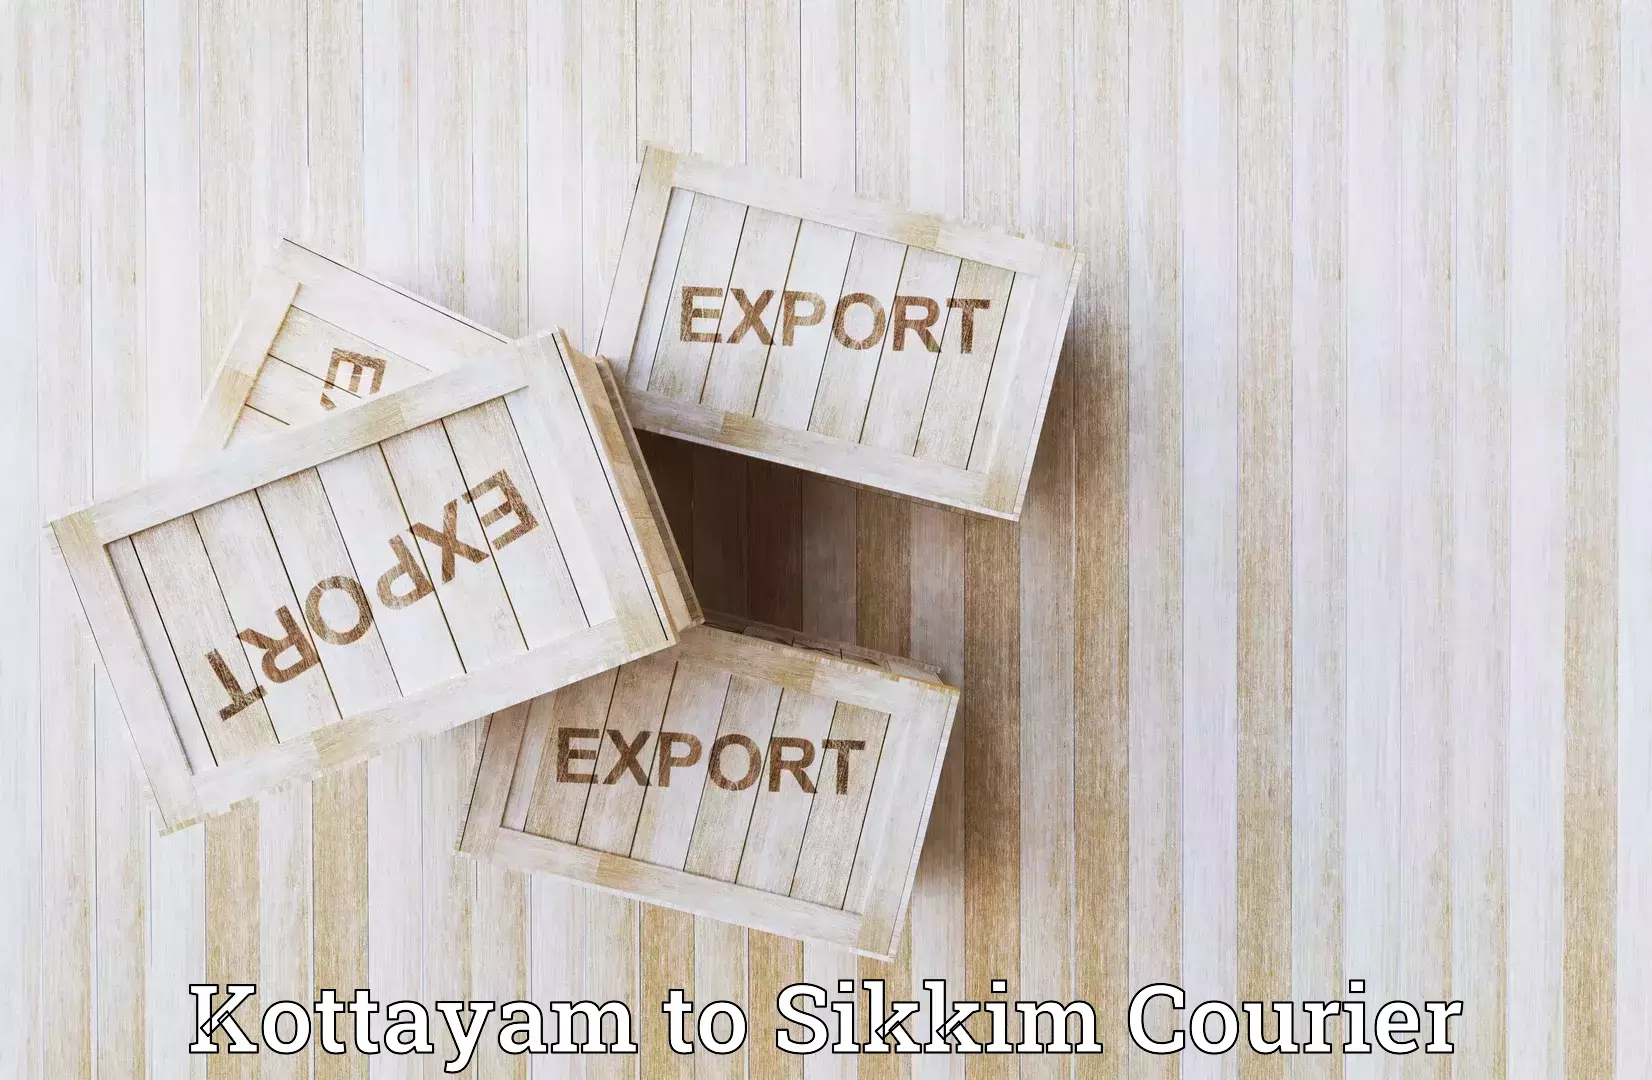 Efficient cargo handling Kottayam to Sikkim